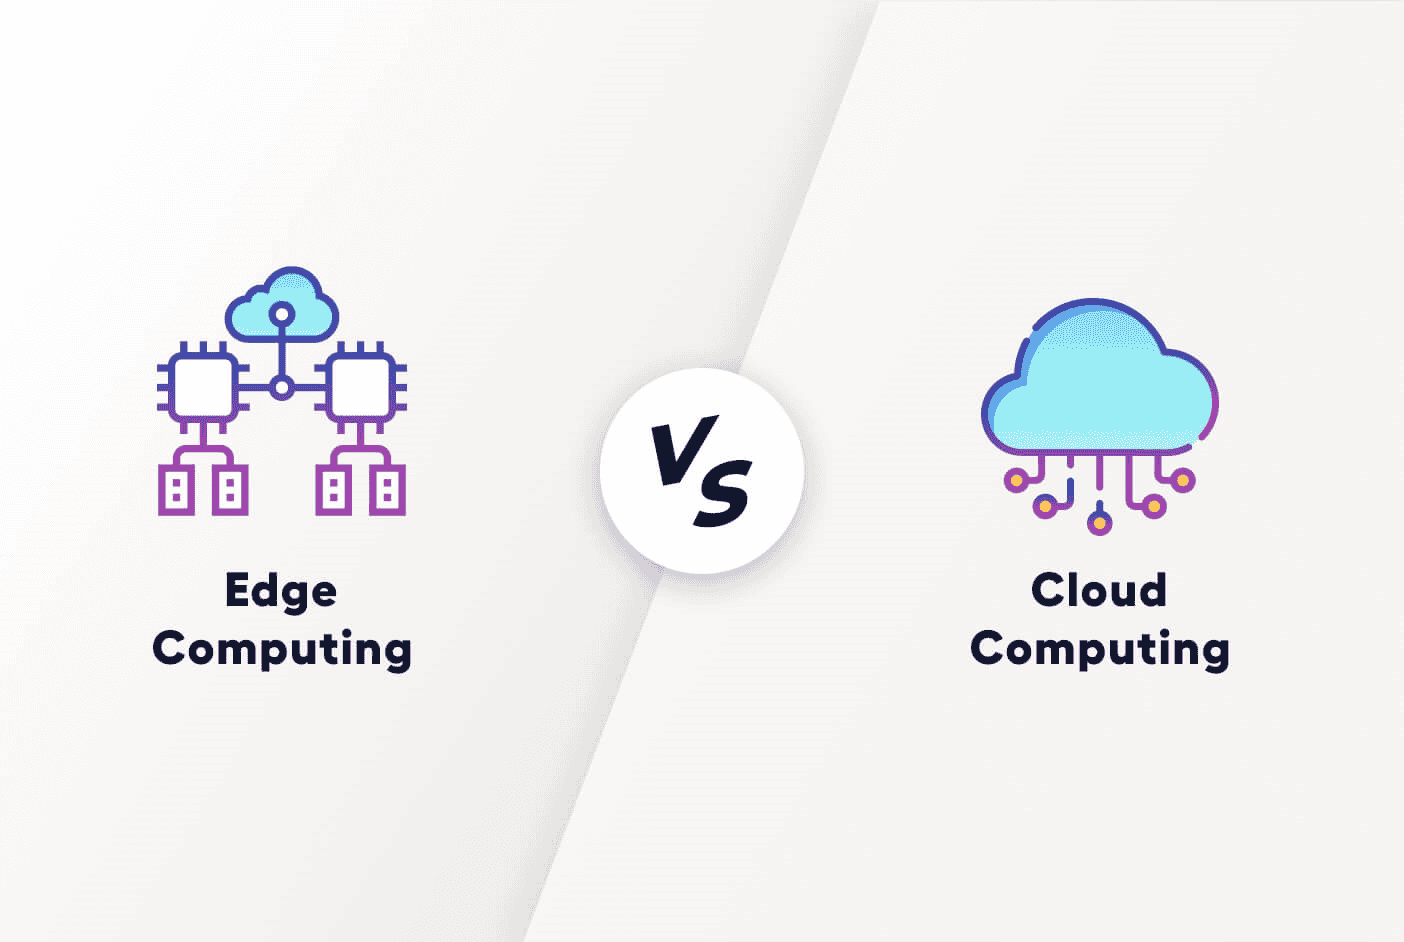 Edge Computing vs. Cloud Computing